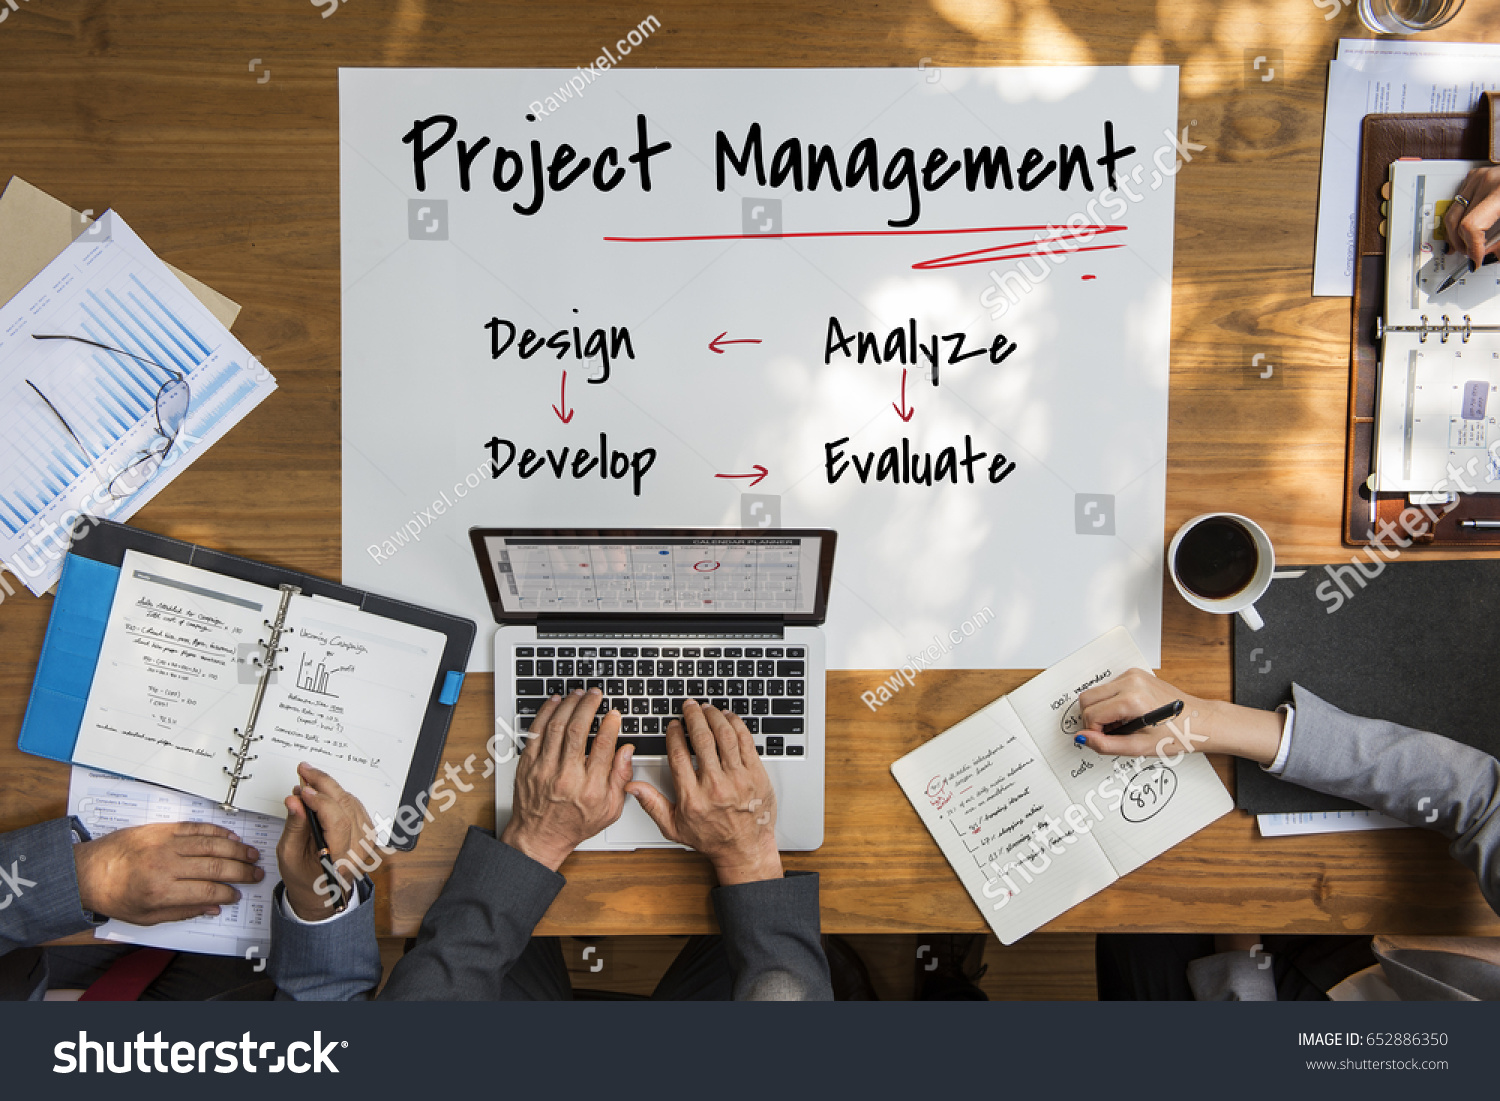 Project Management Business Organization Strategy Stock Photo 652886350 ...